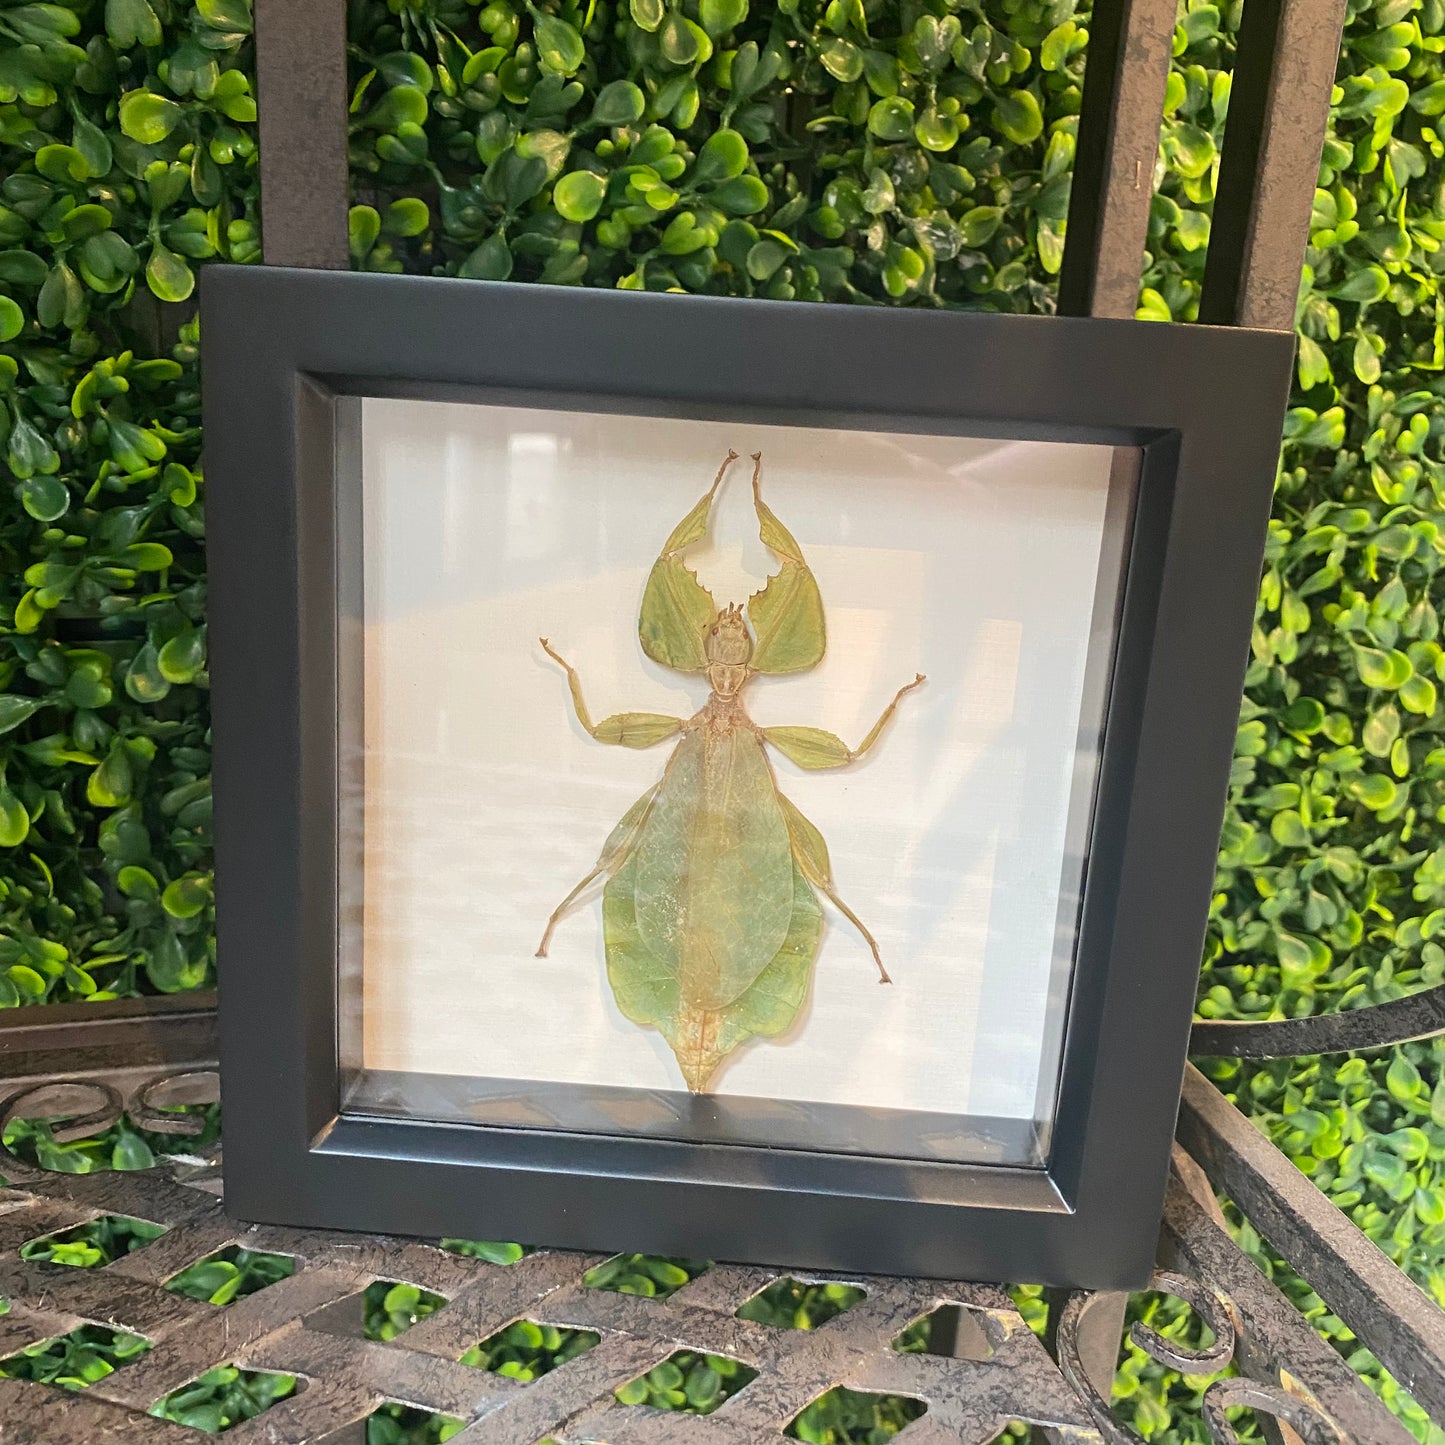 Bug under glass